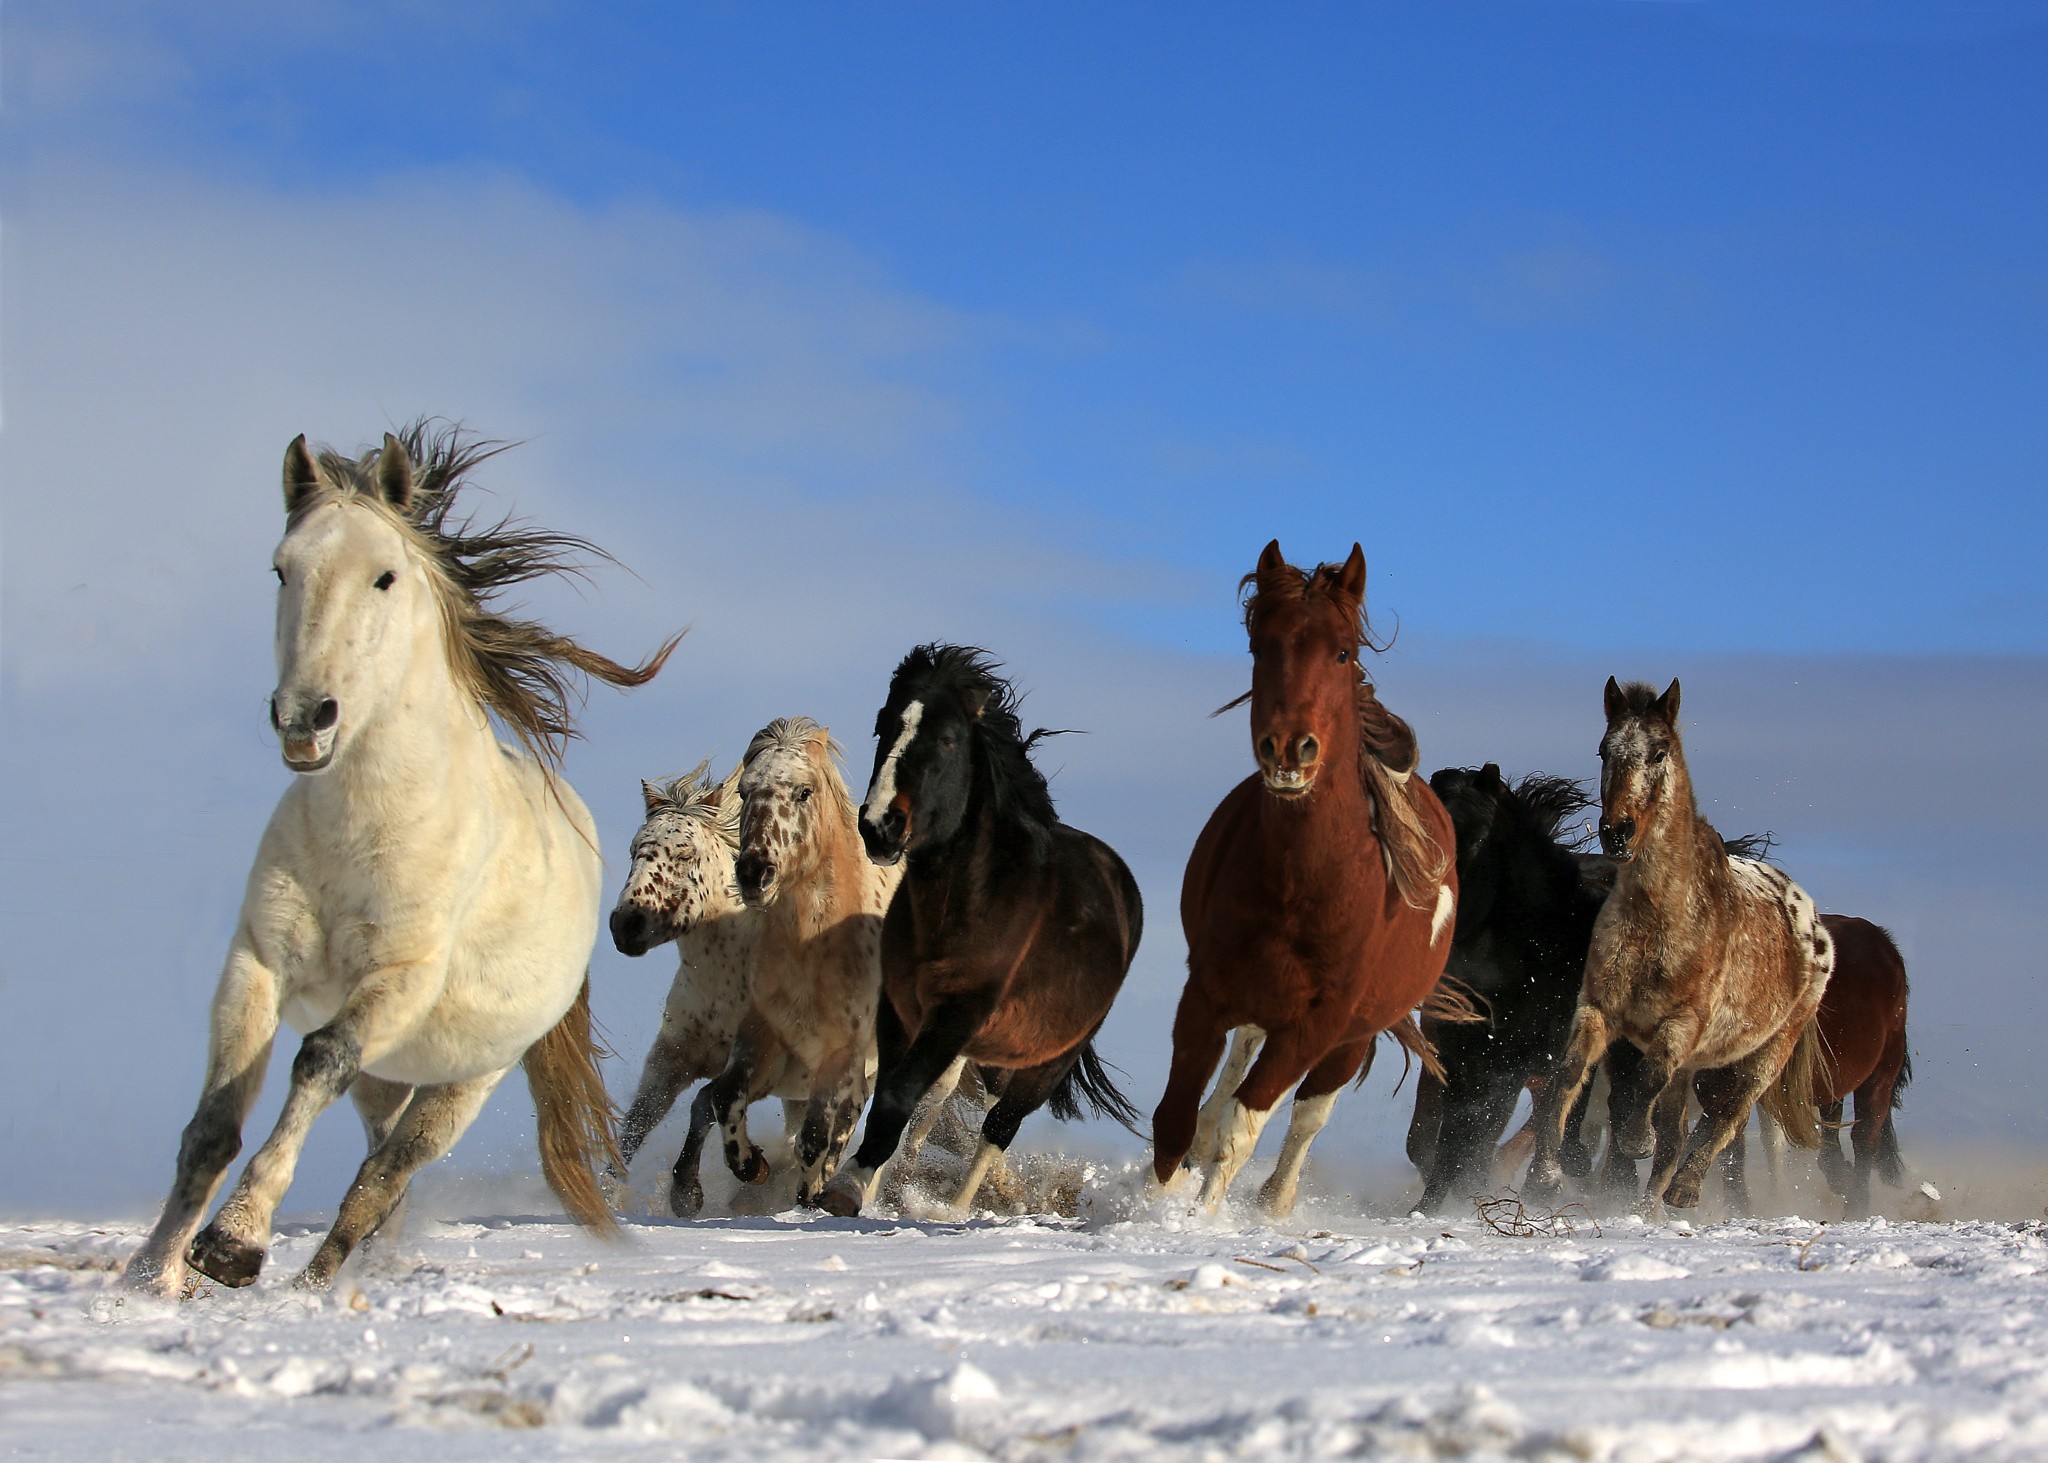 General 2048x1463 horse animals mammals snow winter outdoors